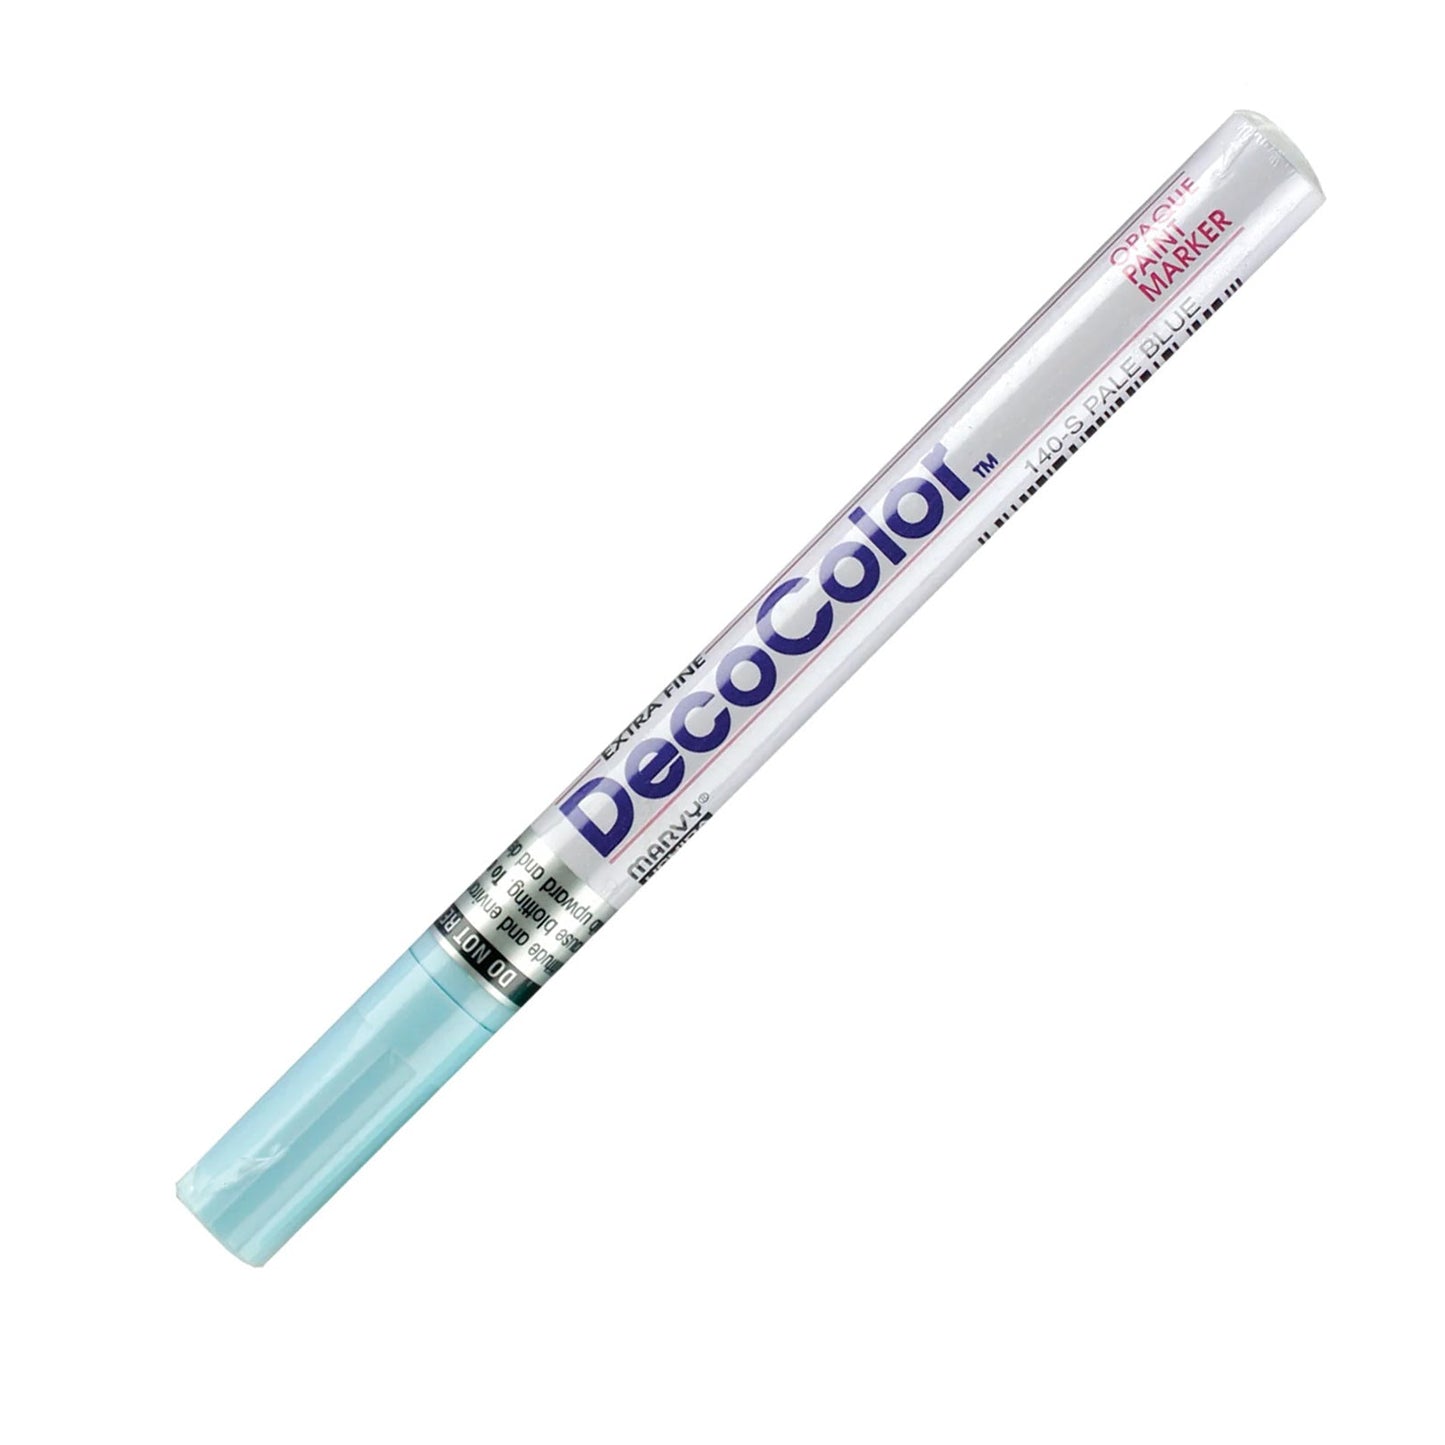 Pennarello a vernice Decocolor, punta Specialtech extra fine da 0,8 mm